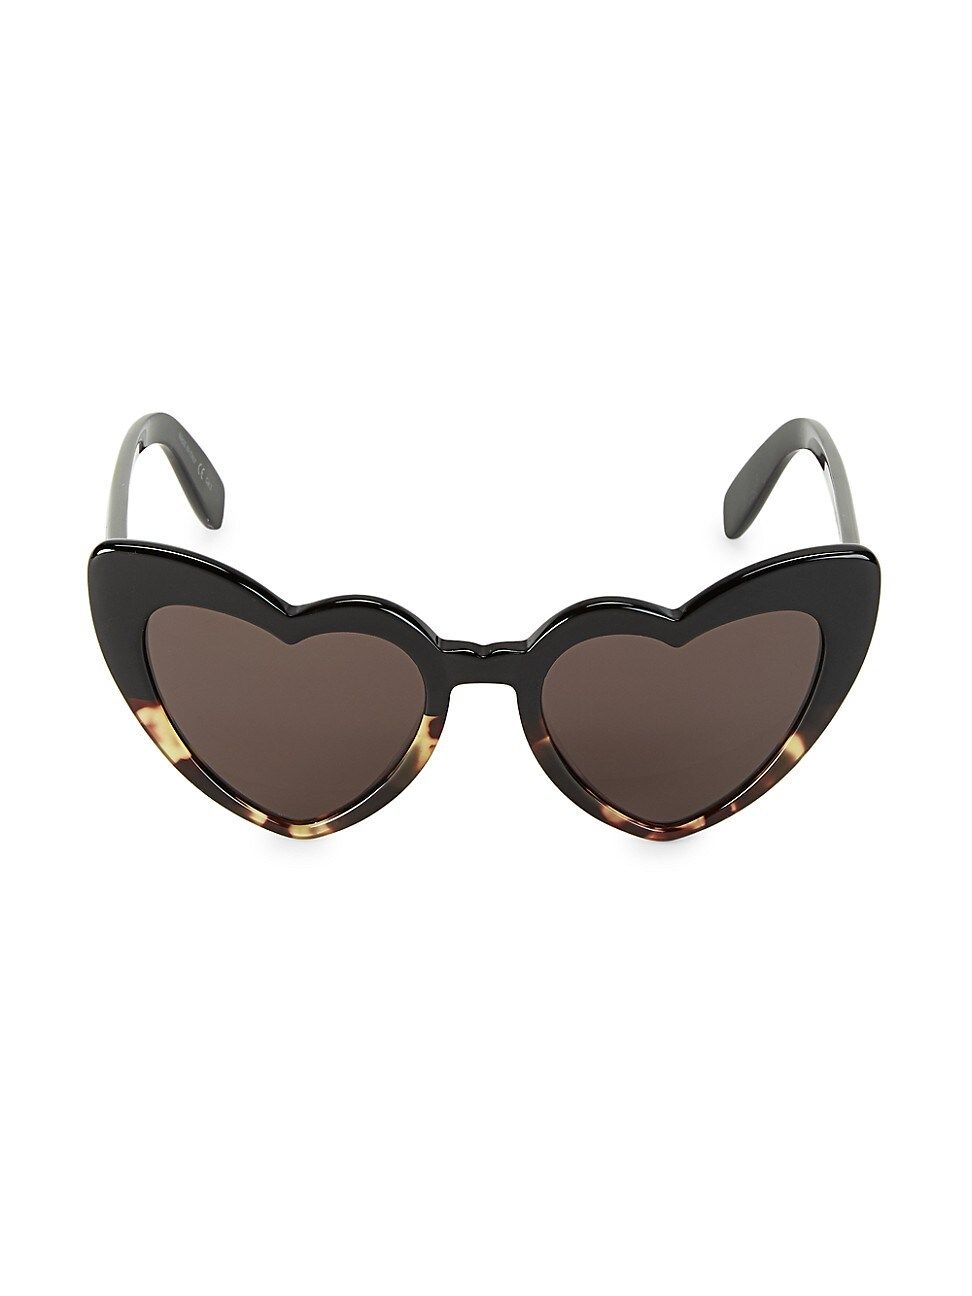 Saint Laurent Women's Loulou 54MM Heart Sunglasses - Havana | Saks Fifth Avenue